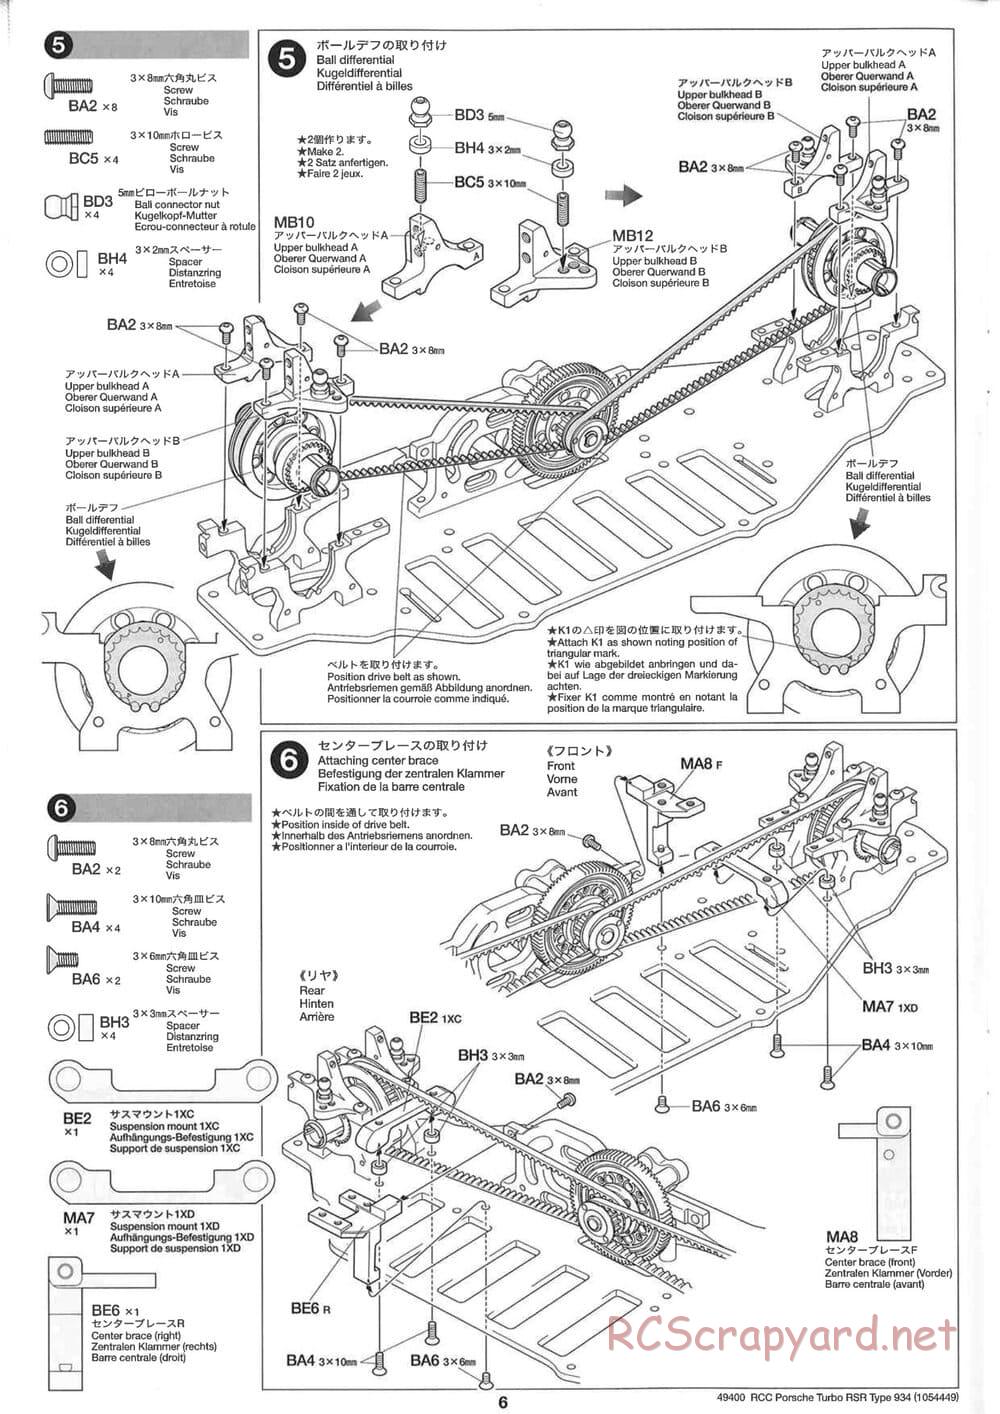 Tamiya - Porsche Turbo RSR Type 934 - TA05 Chassis - Manual - Page 6